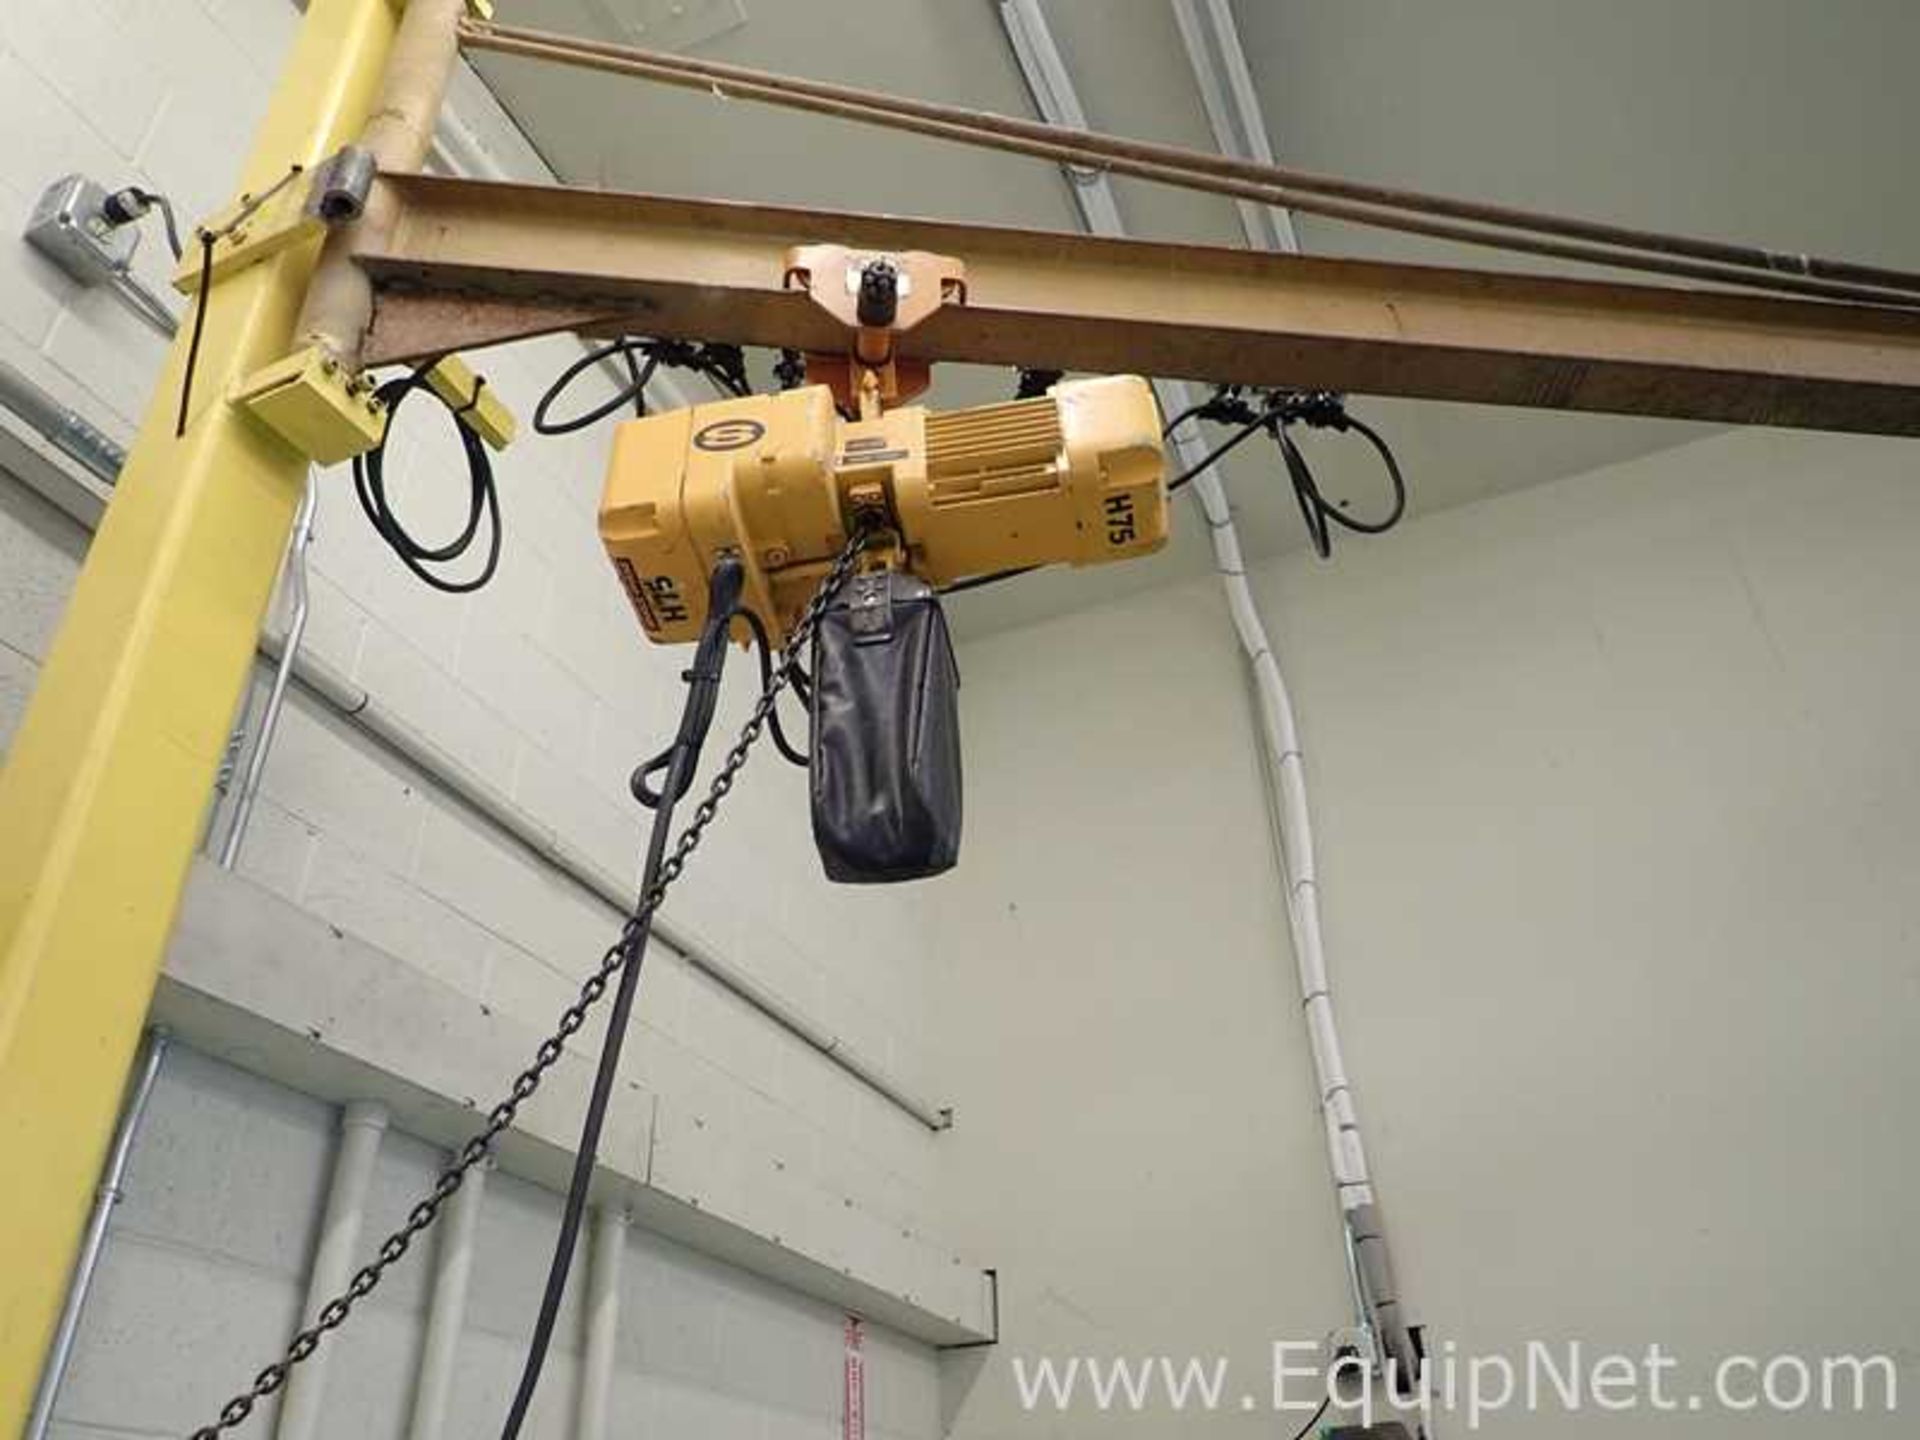 Quarter Ton Jib Crane with Harrington Quarter Ton Electric Hoist C34 - 688851 - Image 3 of 5